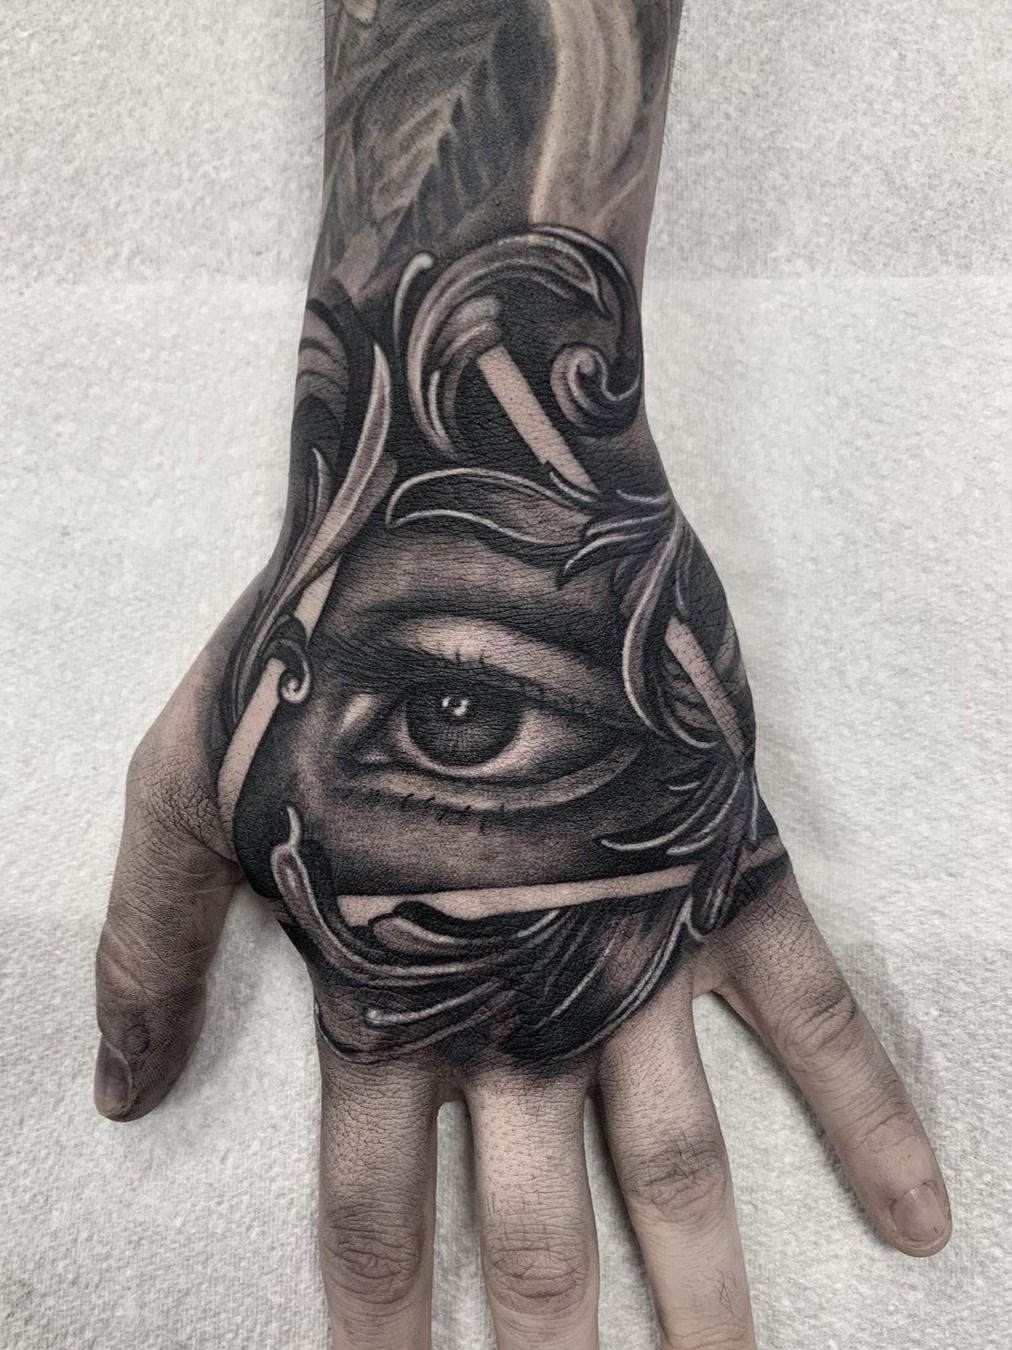 Eye Symbol Hand Tattoos A Meaningful Design